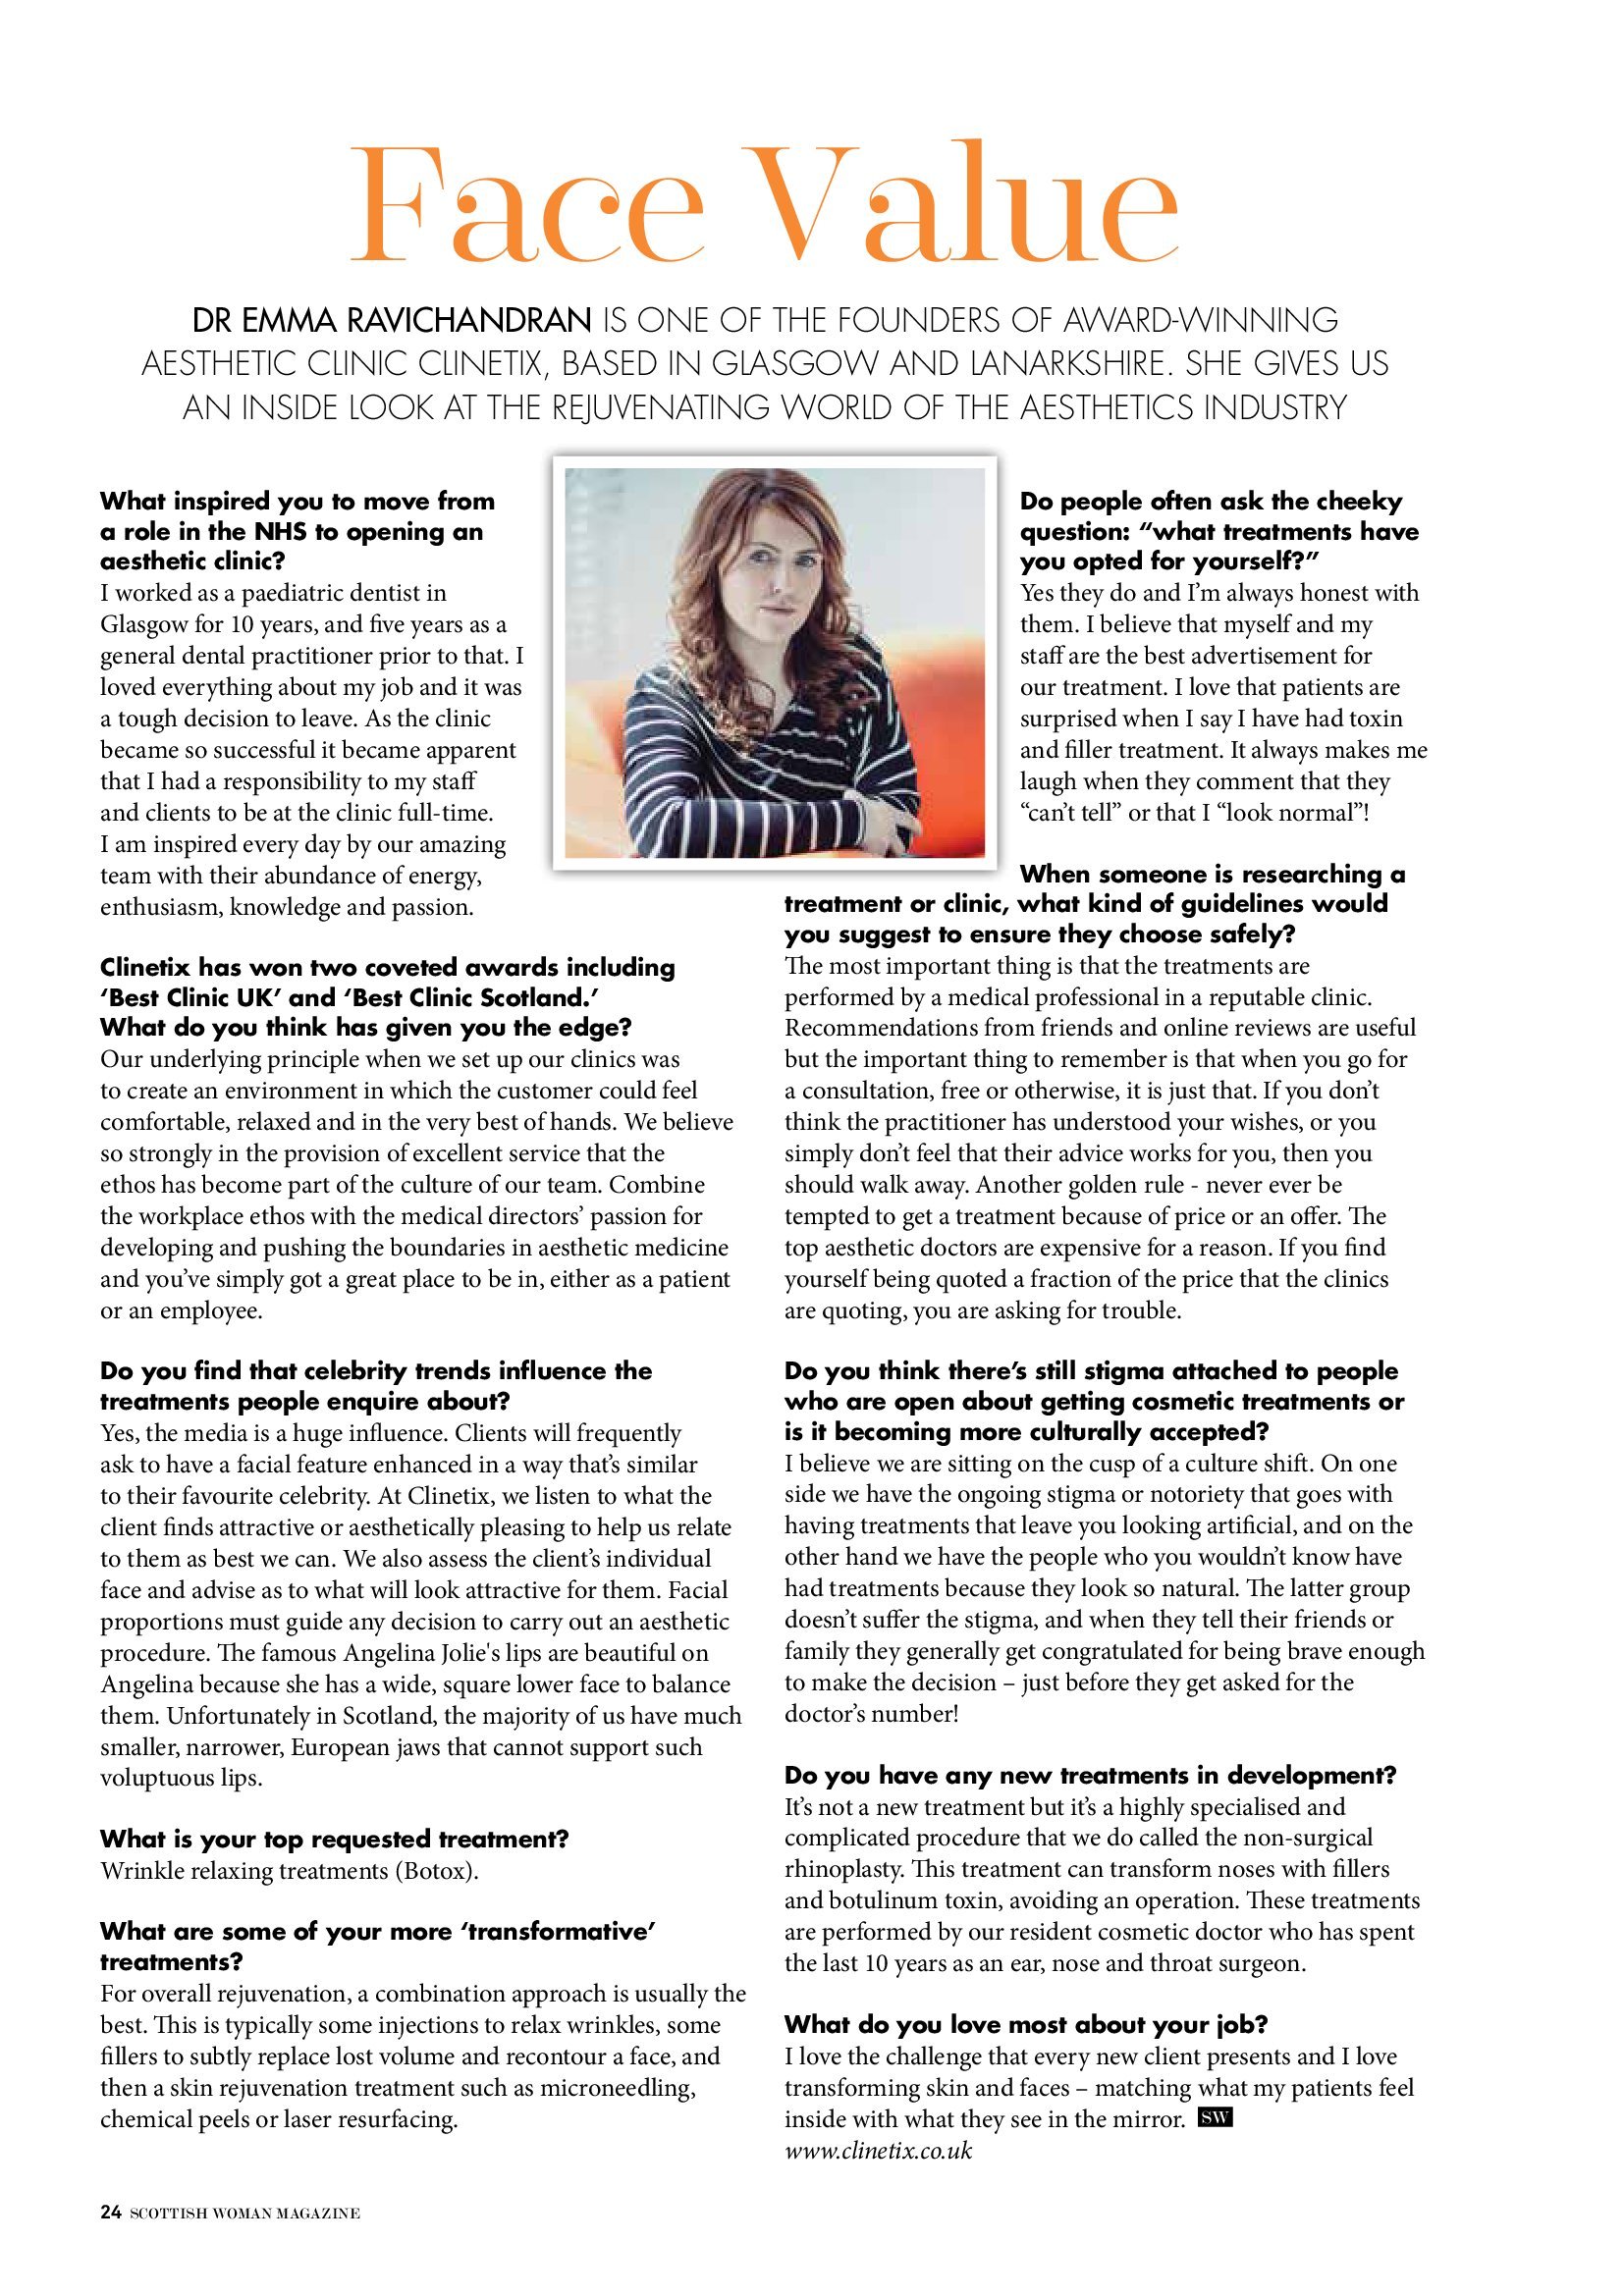 Face Value - Scottish Woman Magazine.png